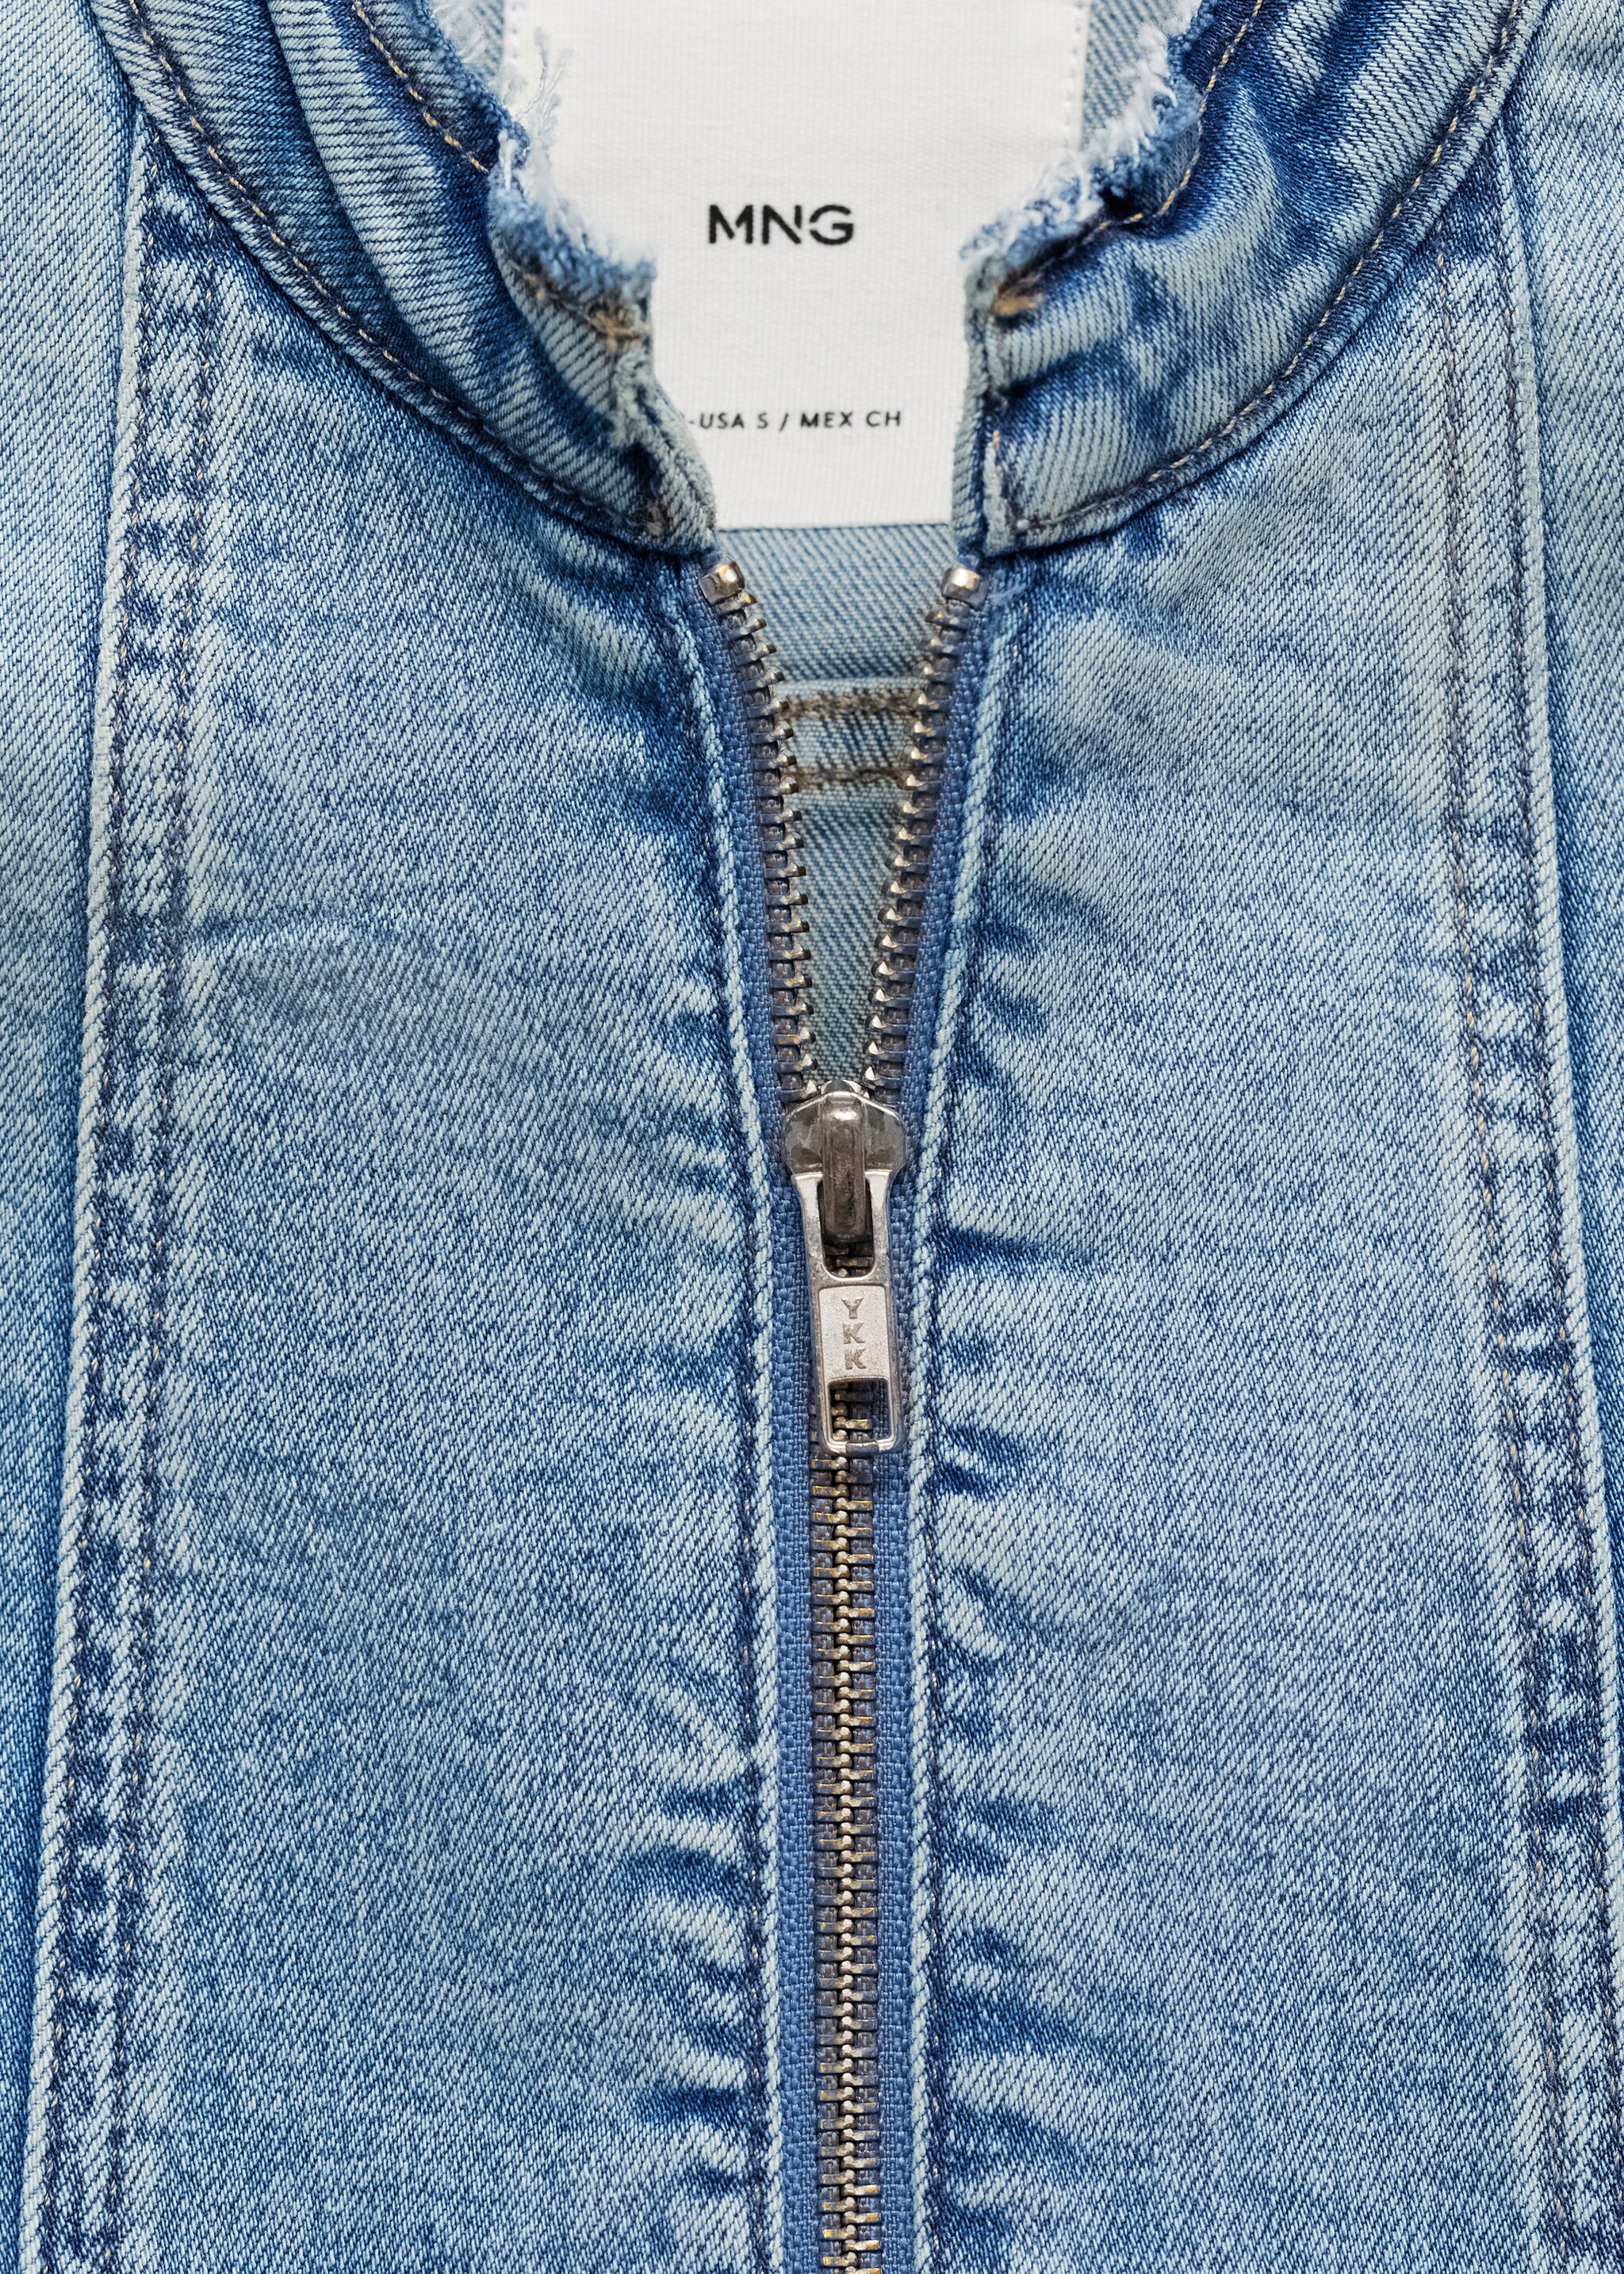 Zip-up denim jacket - Details of the article 8